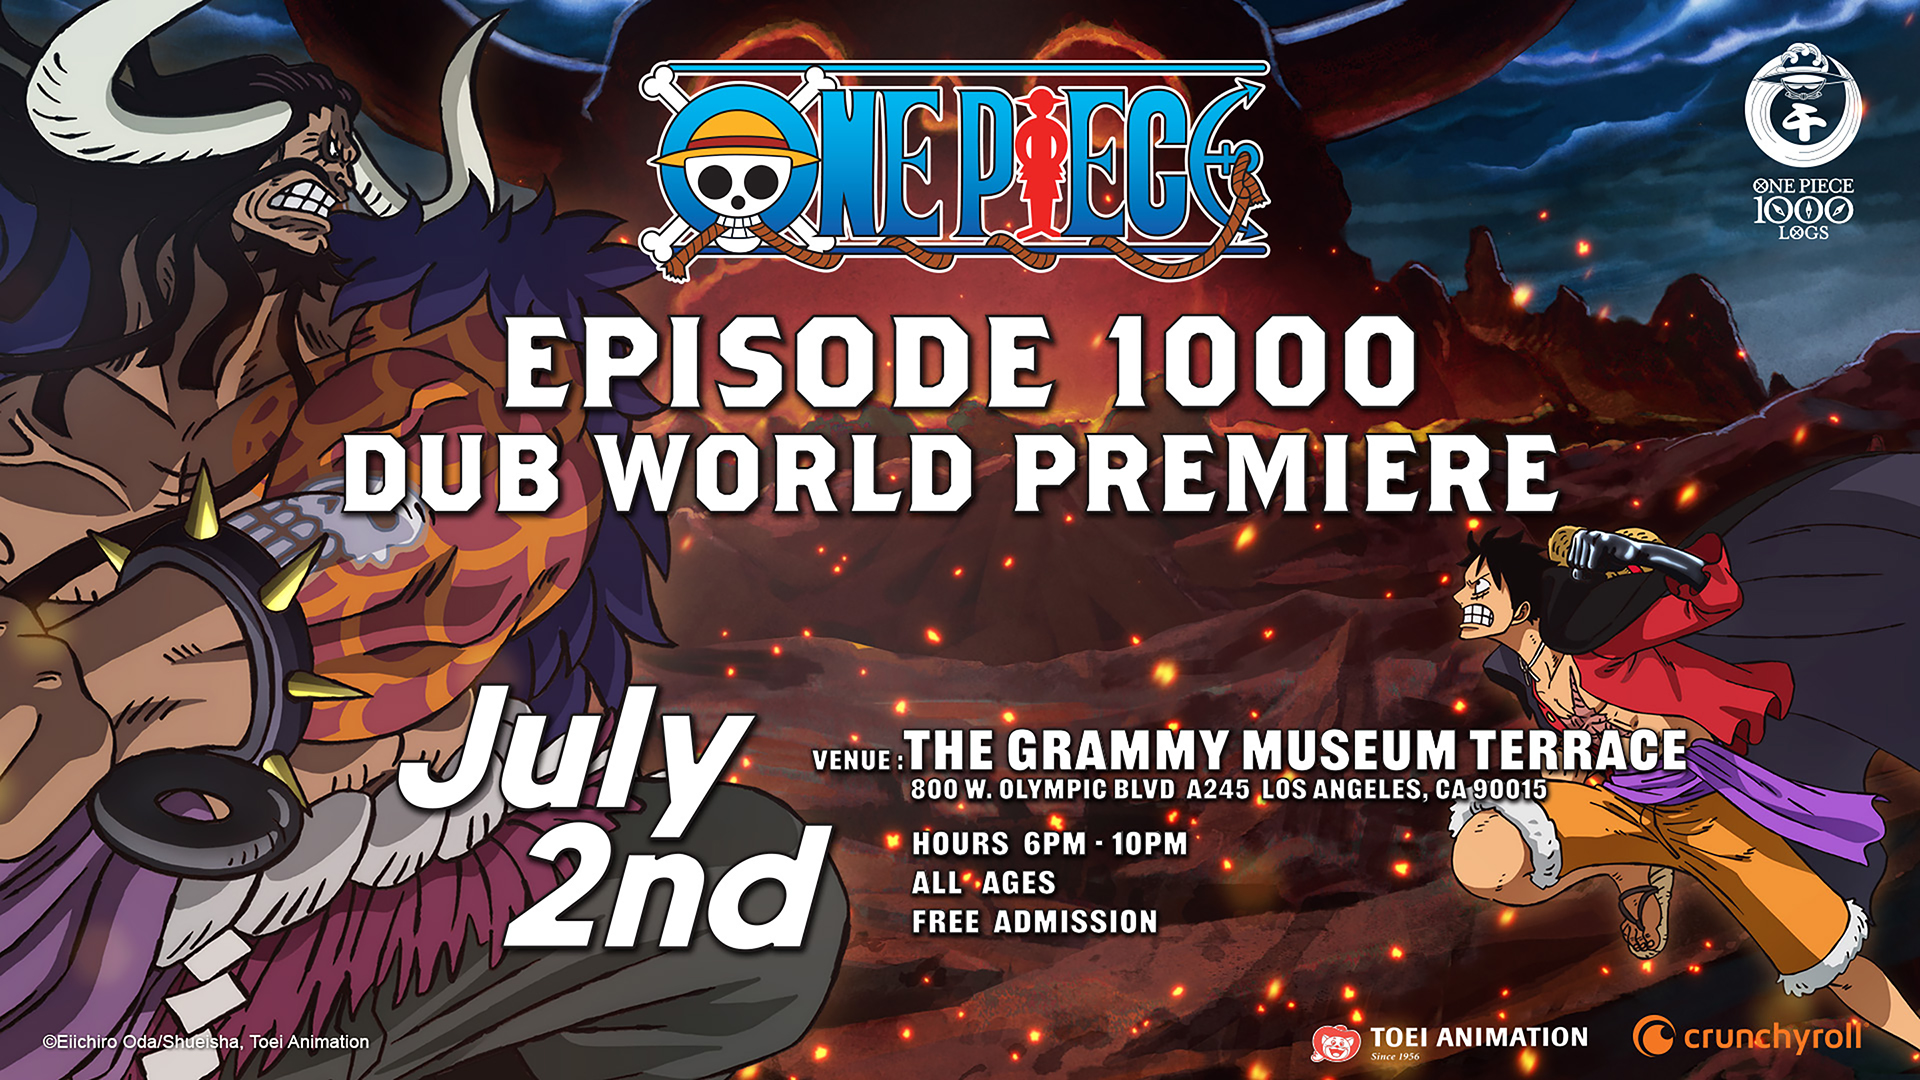 Toei Animation to Bring 'ONE PIECE Episode 1000 Dub World Premiere